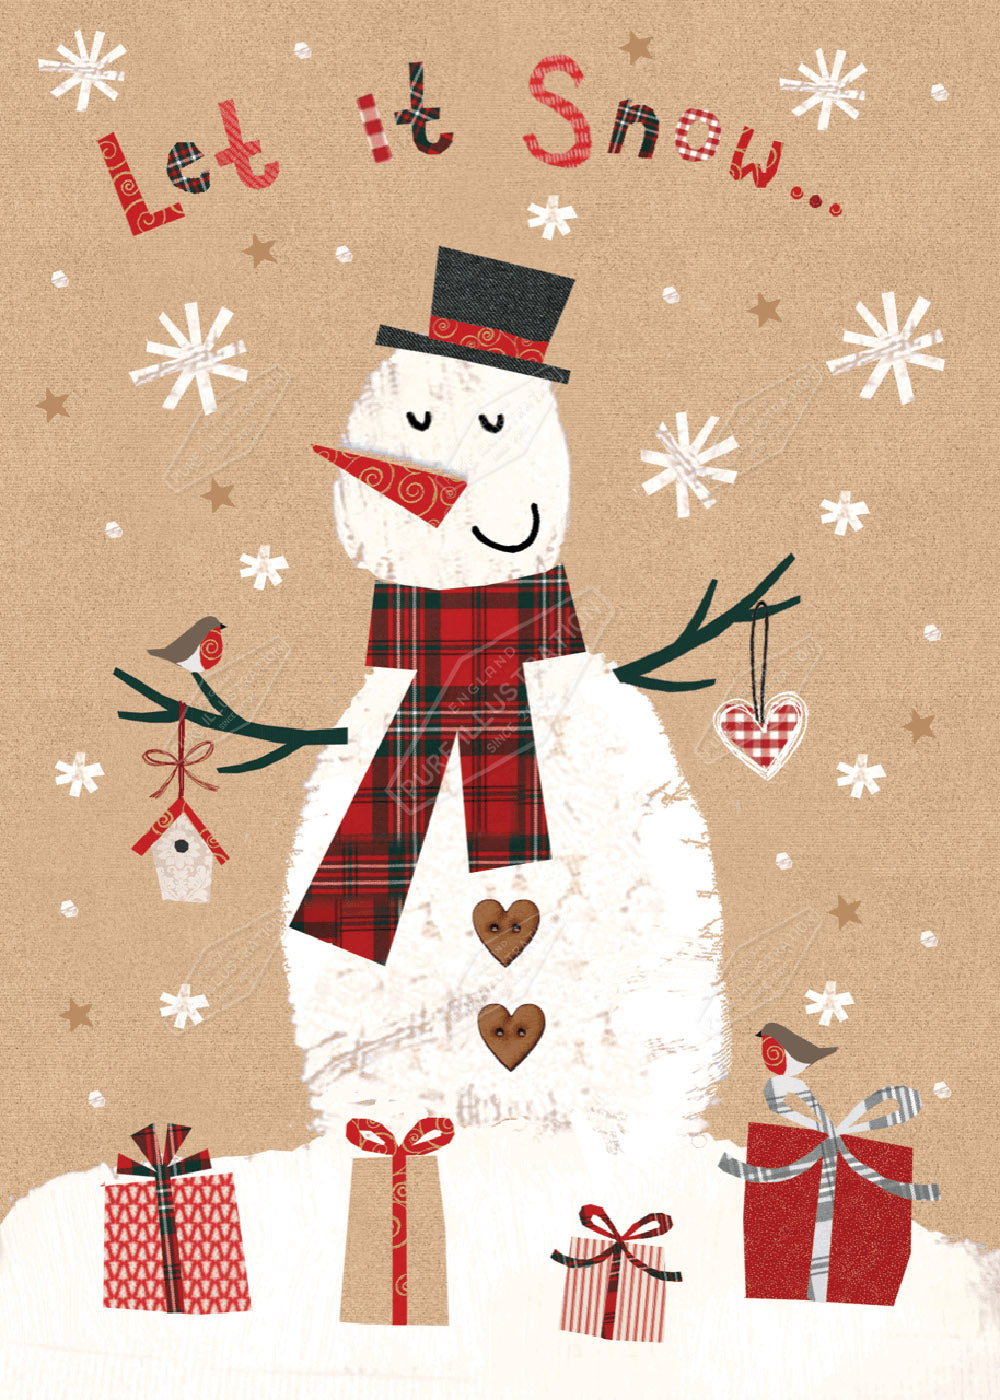 00033196DEV - Deva Evans is represented by Pure Art Licensing Agency - Christmas Greeting Card Design